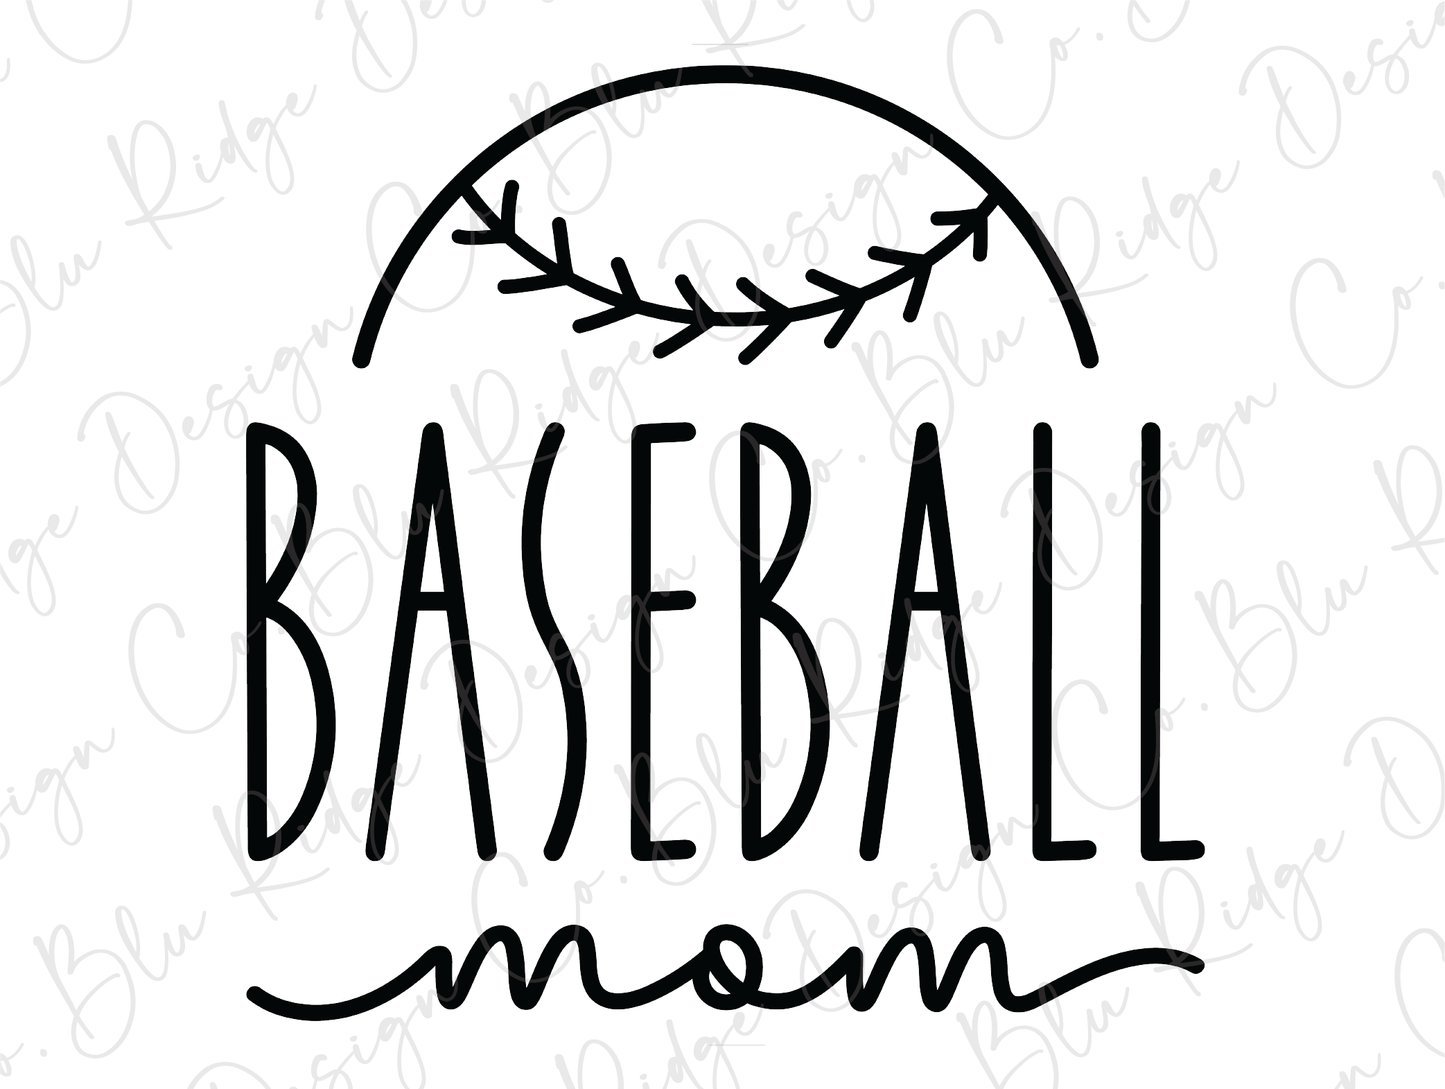 Baseball Mom Silhouette Direct To Film (DTF) Transfer